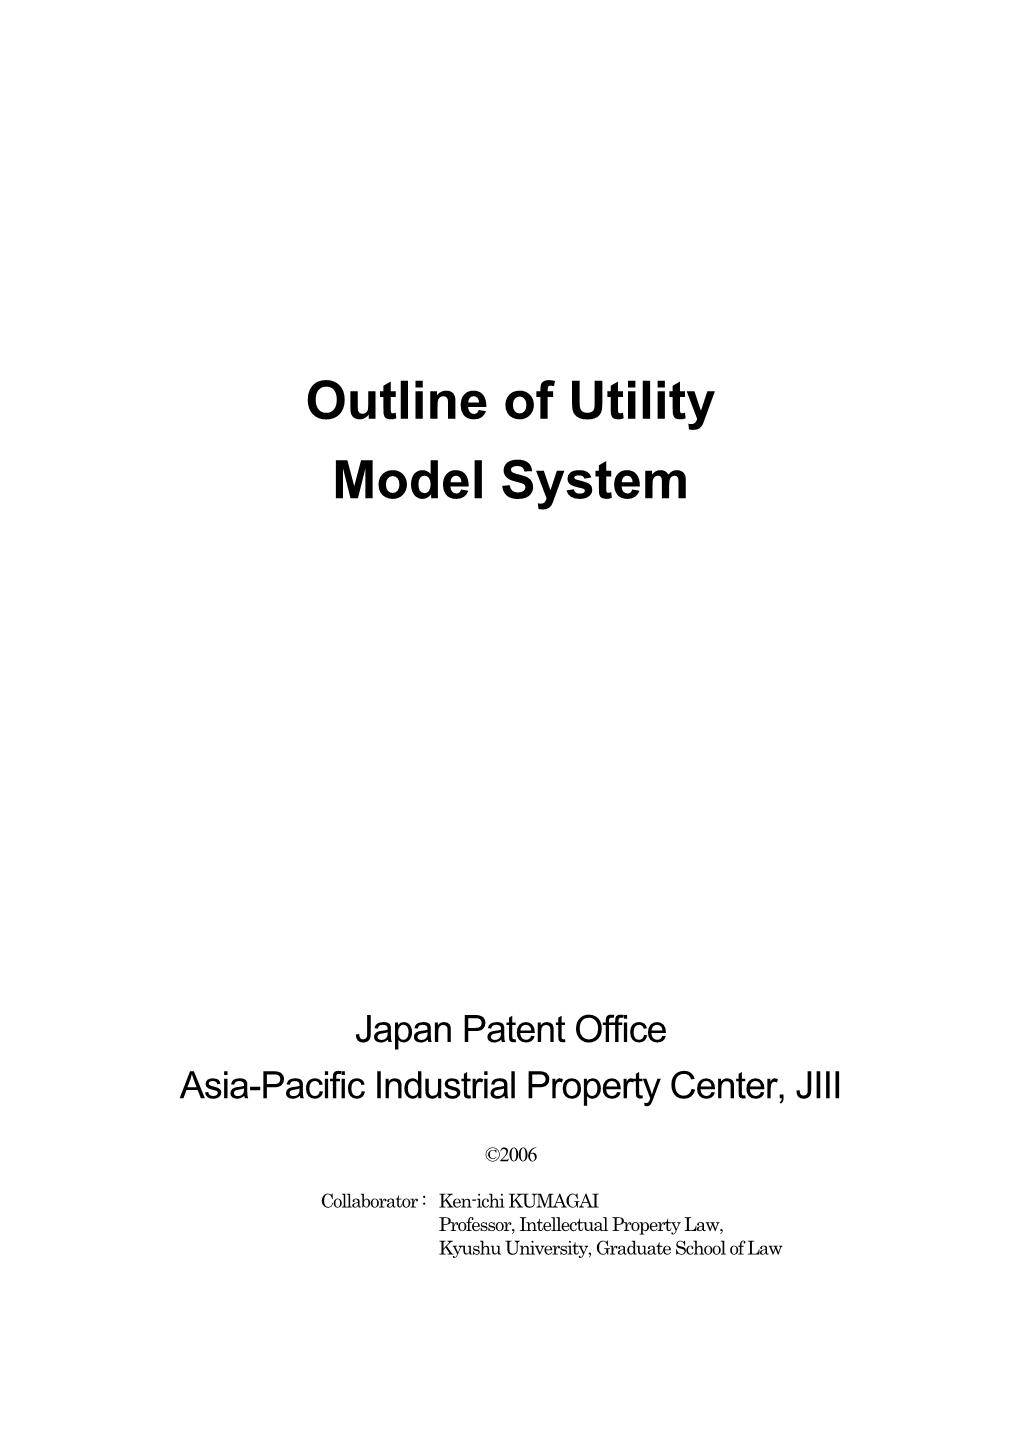 Outline of Utility Model System